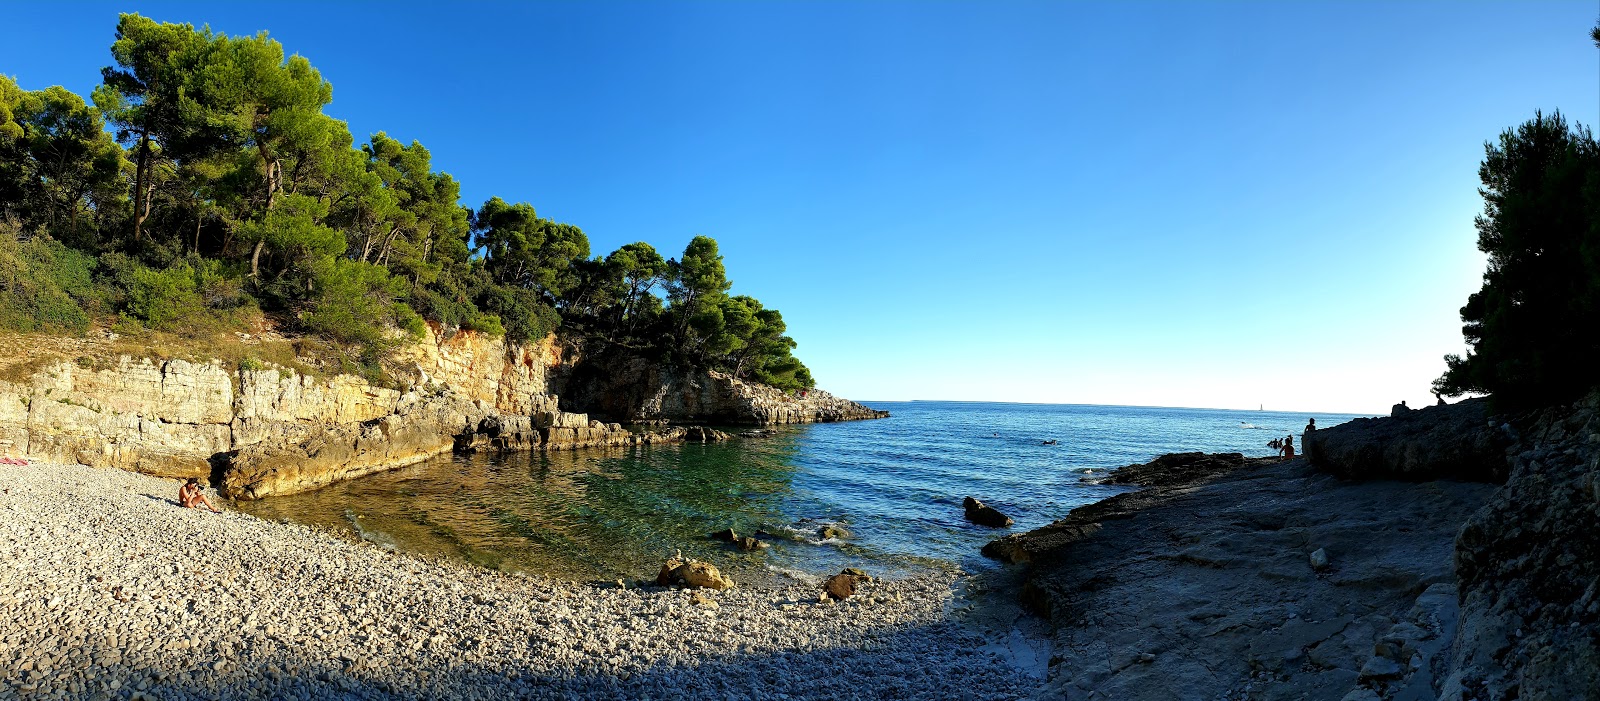 Photo of Stoja beach with rocks cover surface